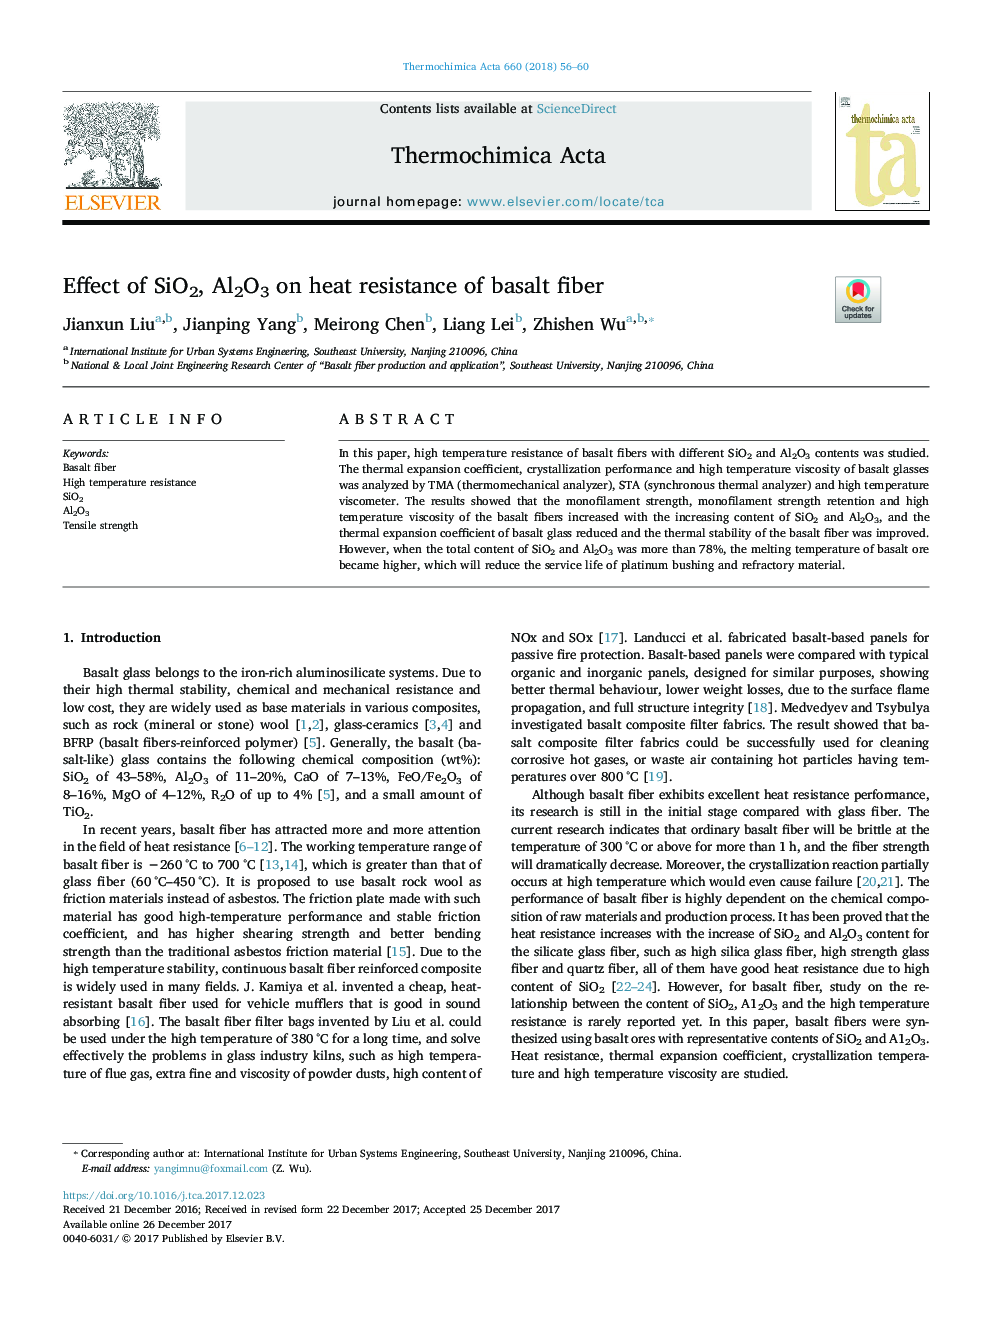 Effect of SiO2, Al2O3 on heat resistance of basalt fiber